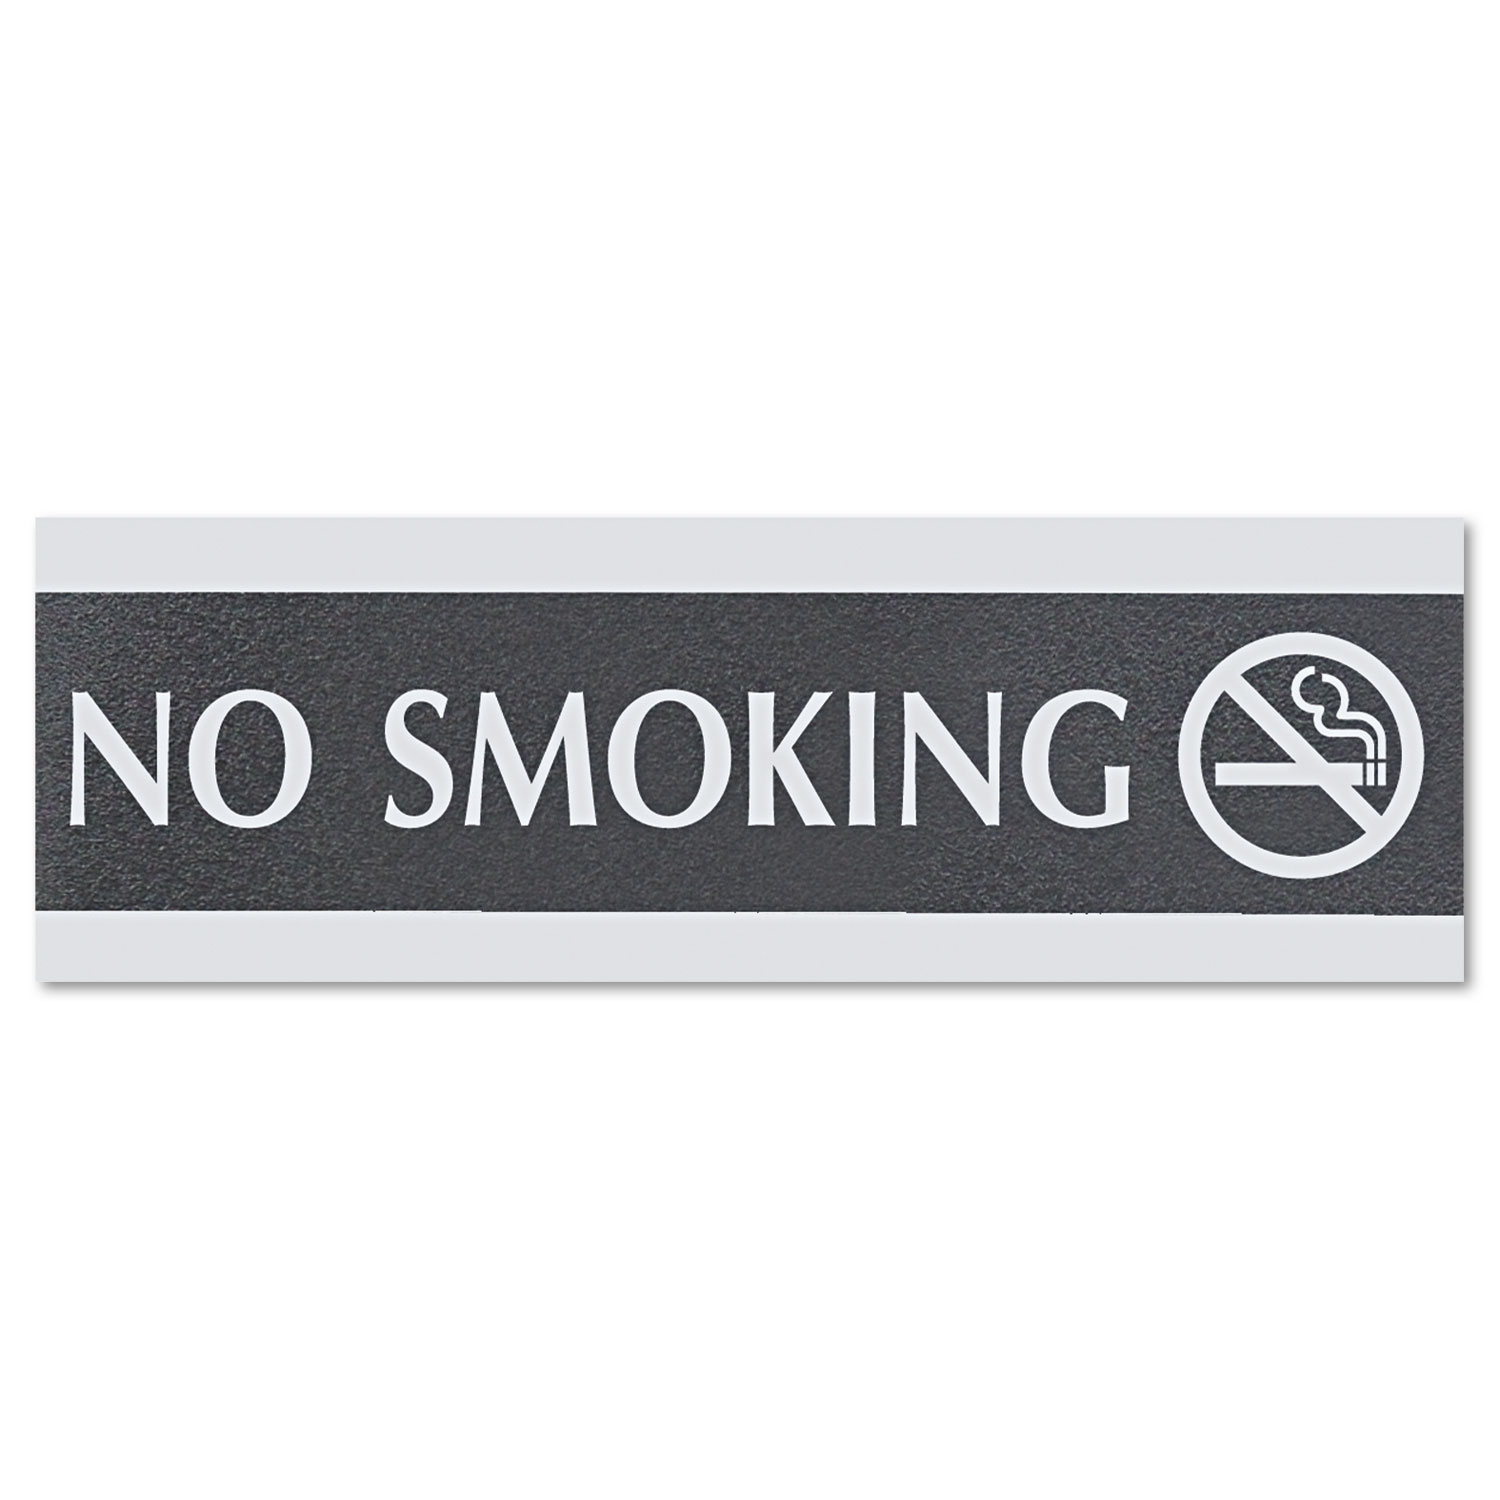 Century Series Office Sign, NO SMOKING, 9 x 3, Black/Silver